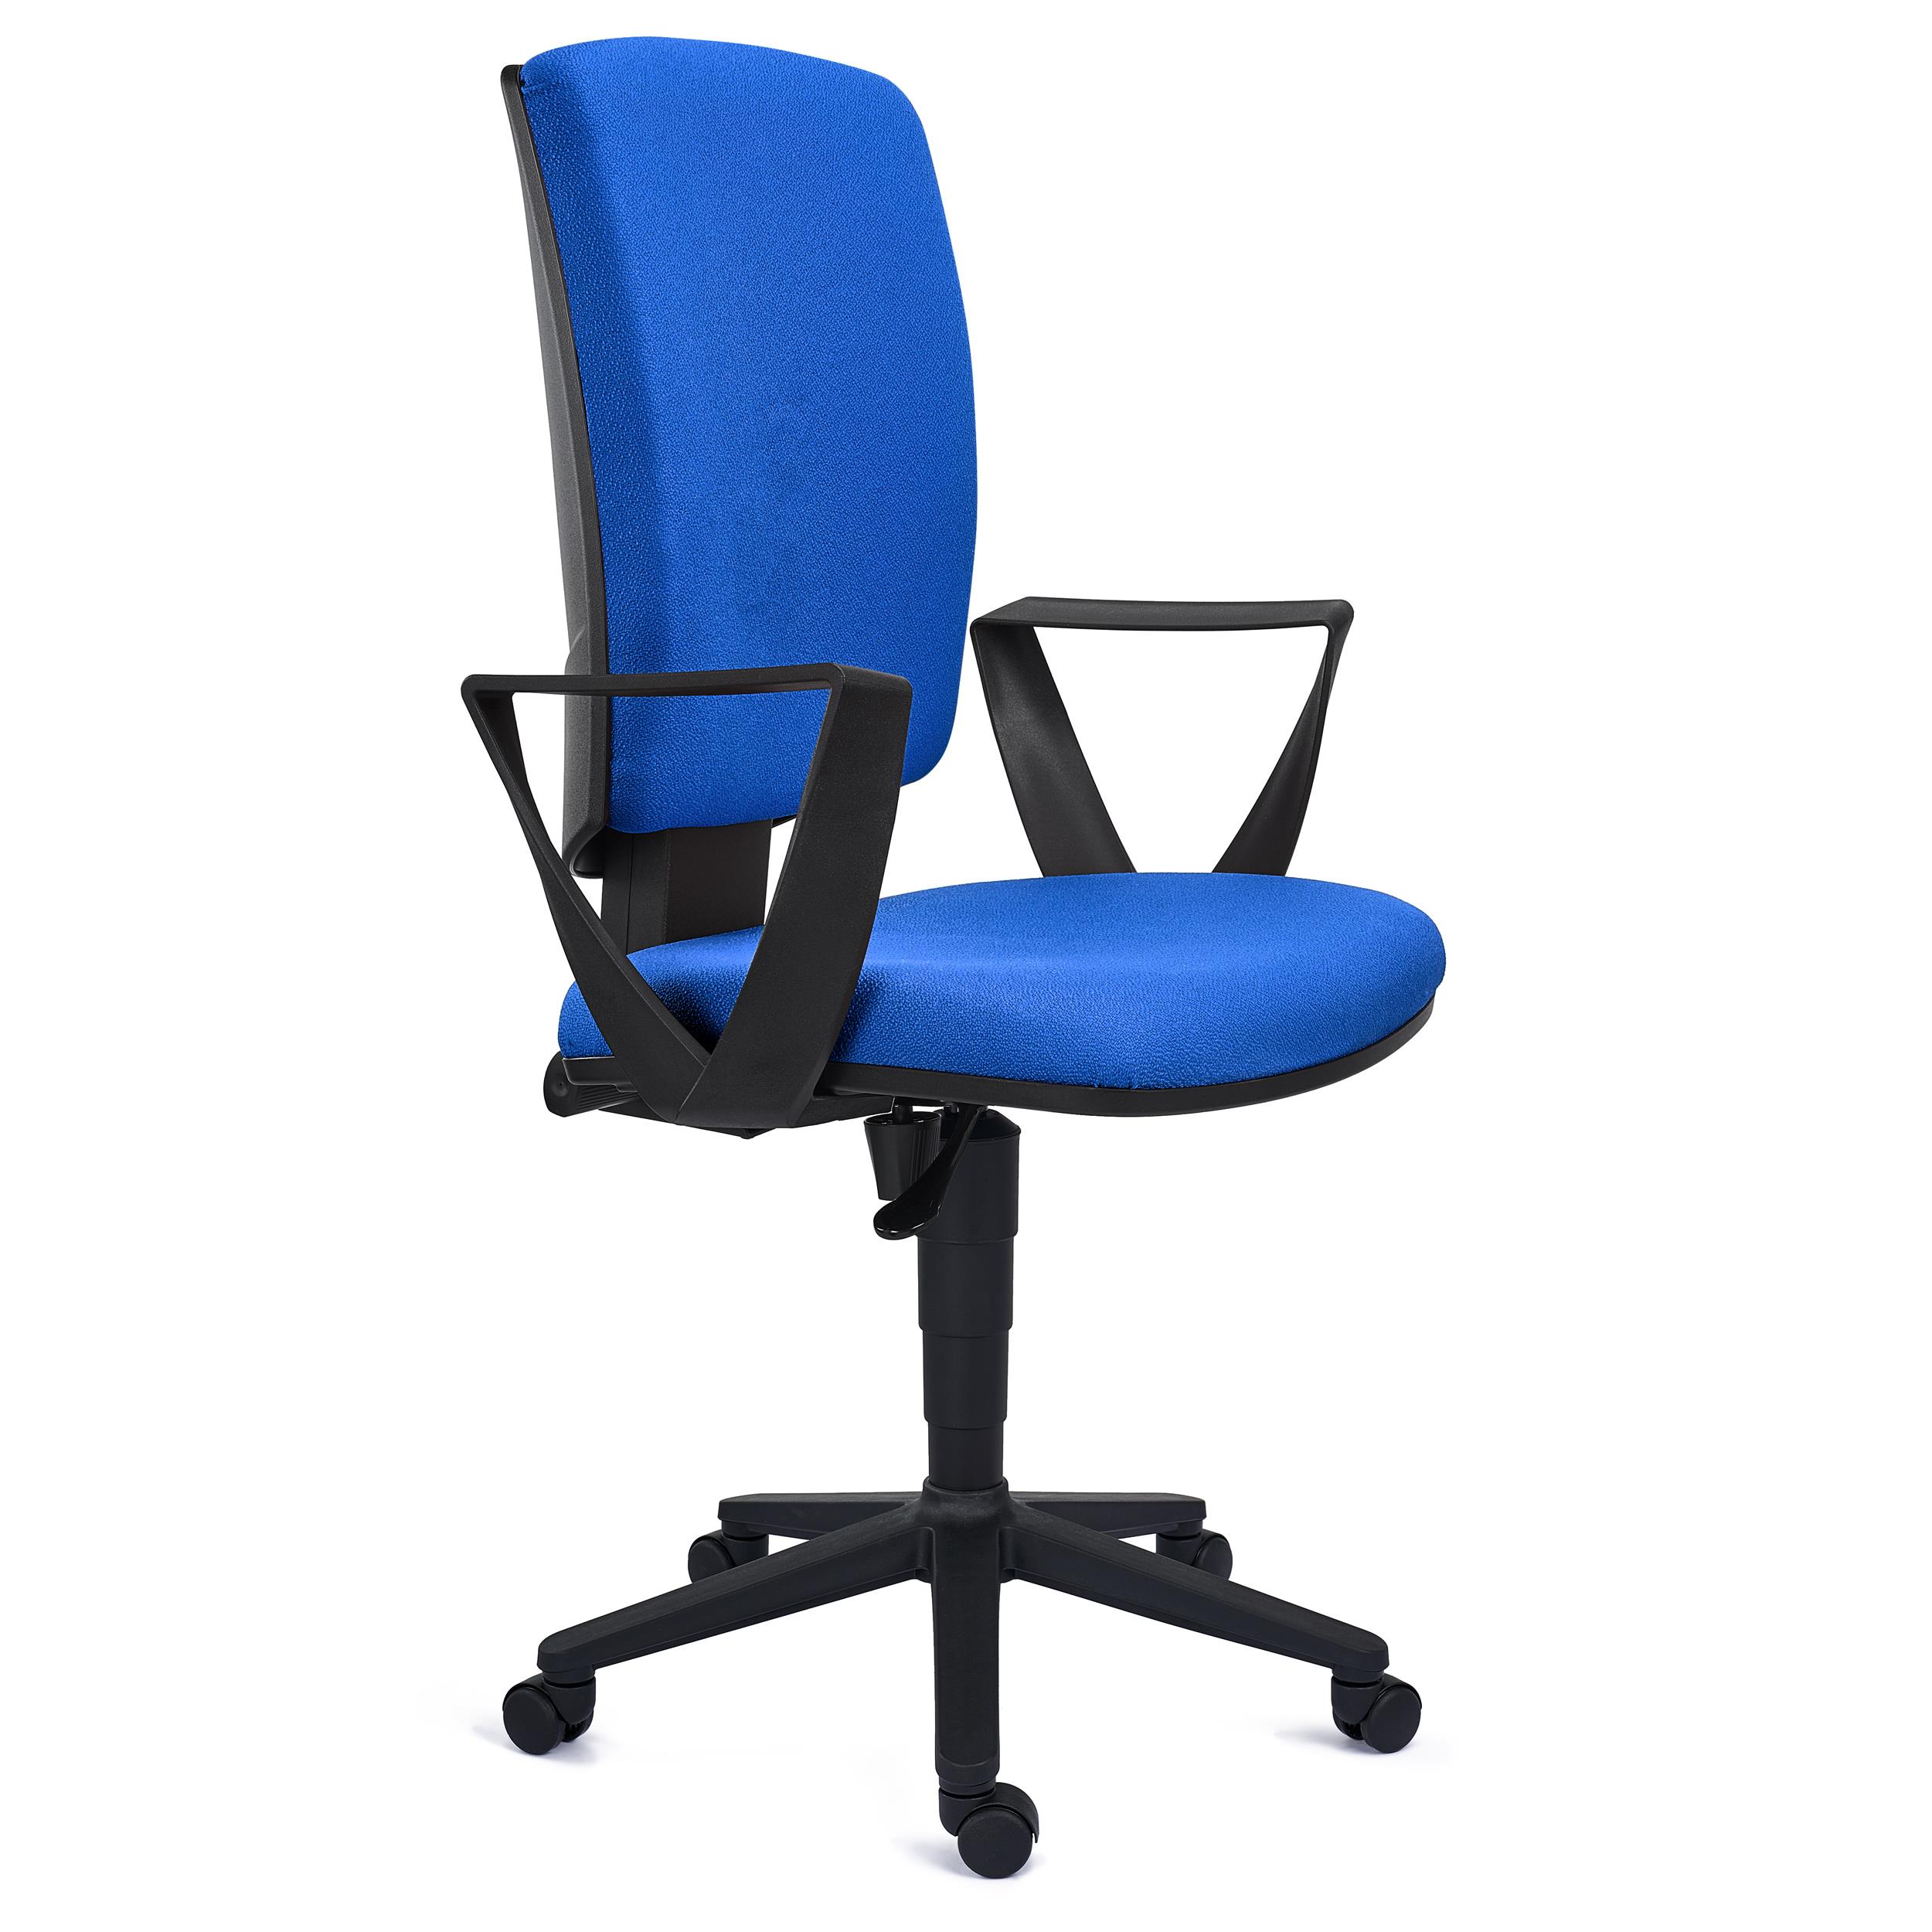 Bürostuhl ATLAS STOFF, verstellbare Rückenlehne, dicke Polsterung, Farbe Blau